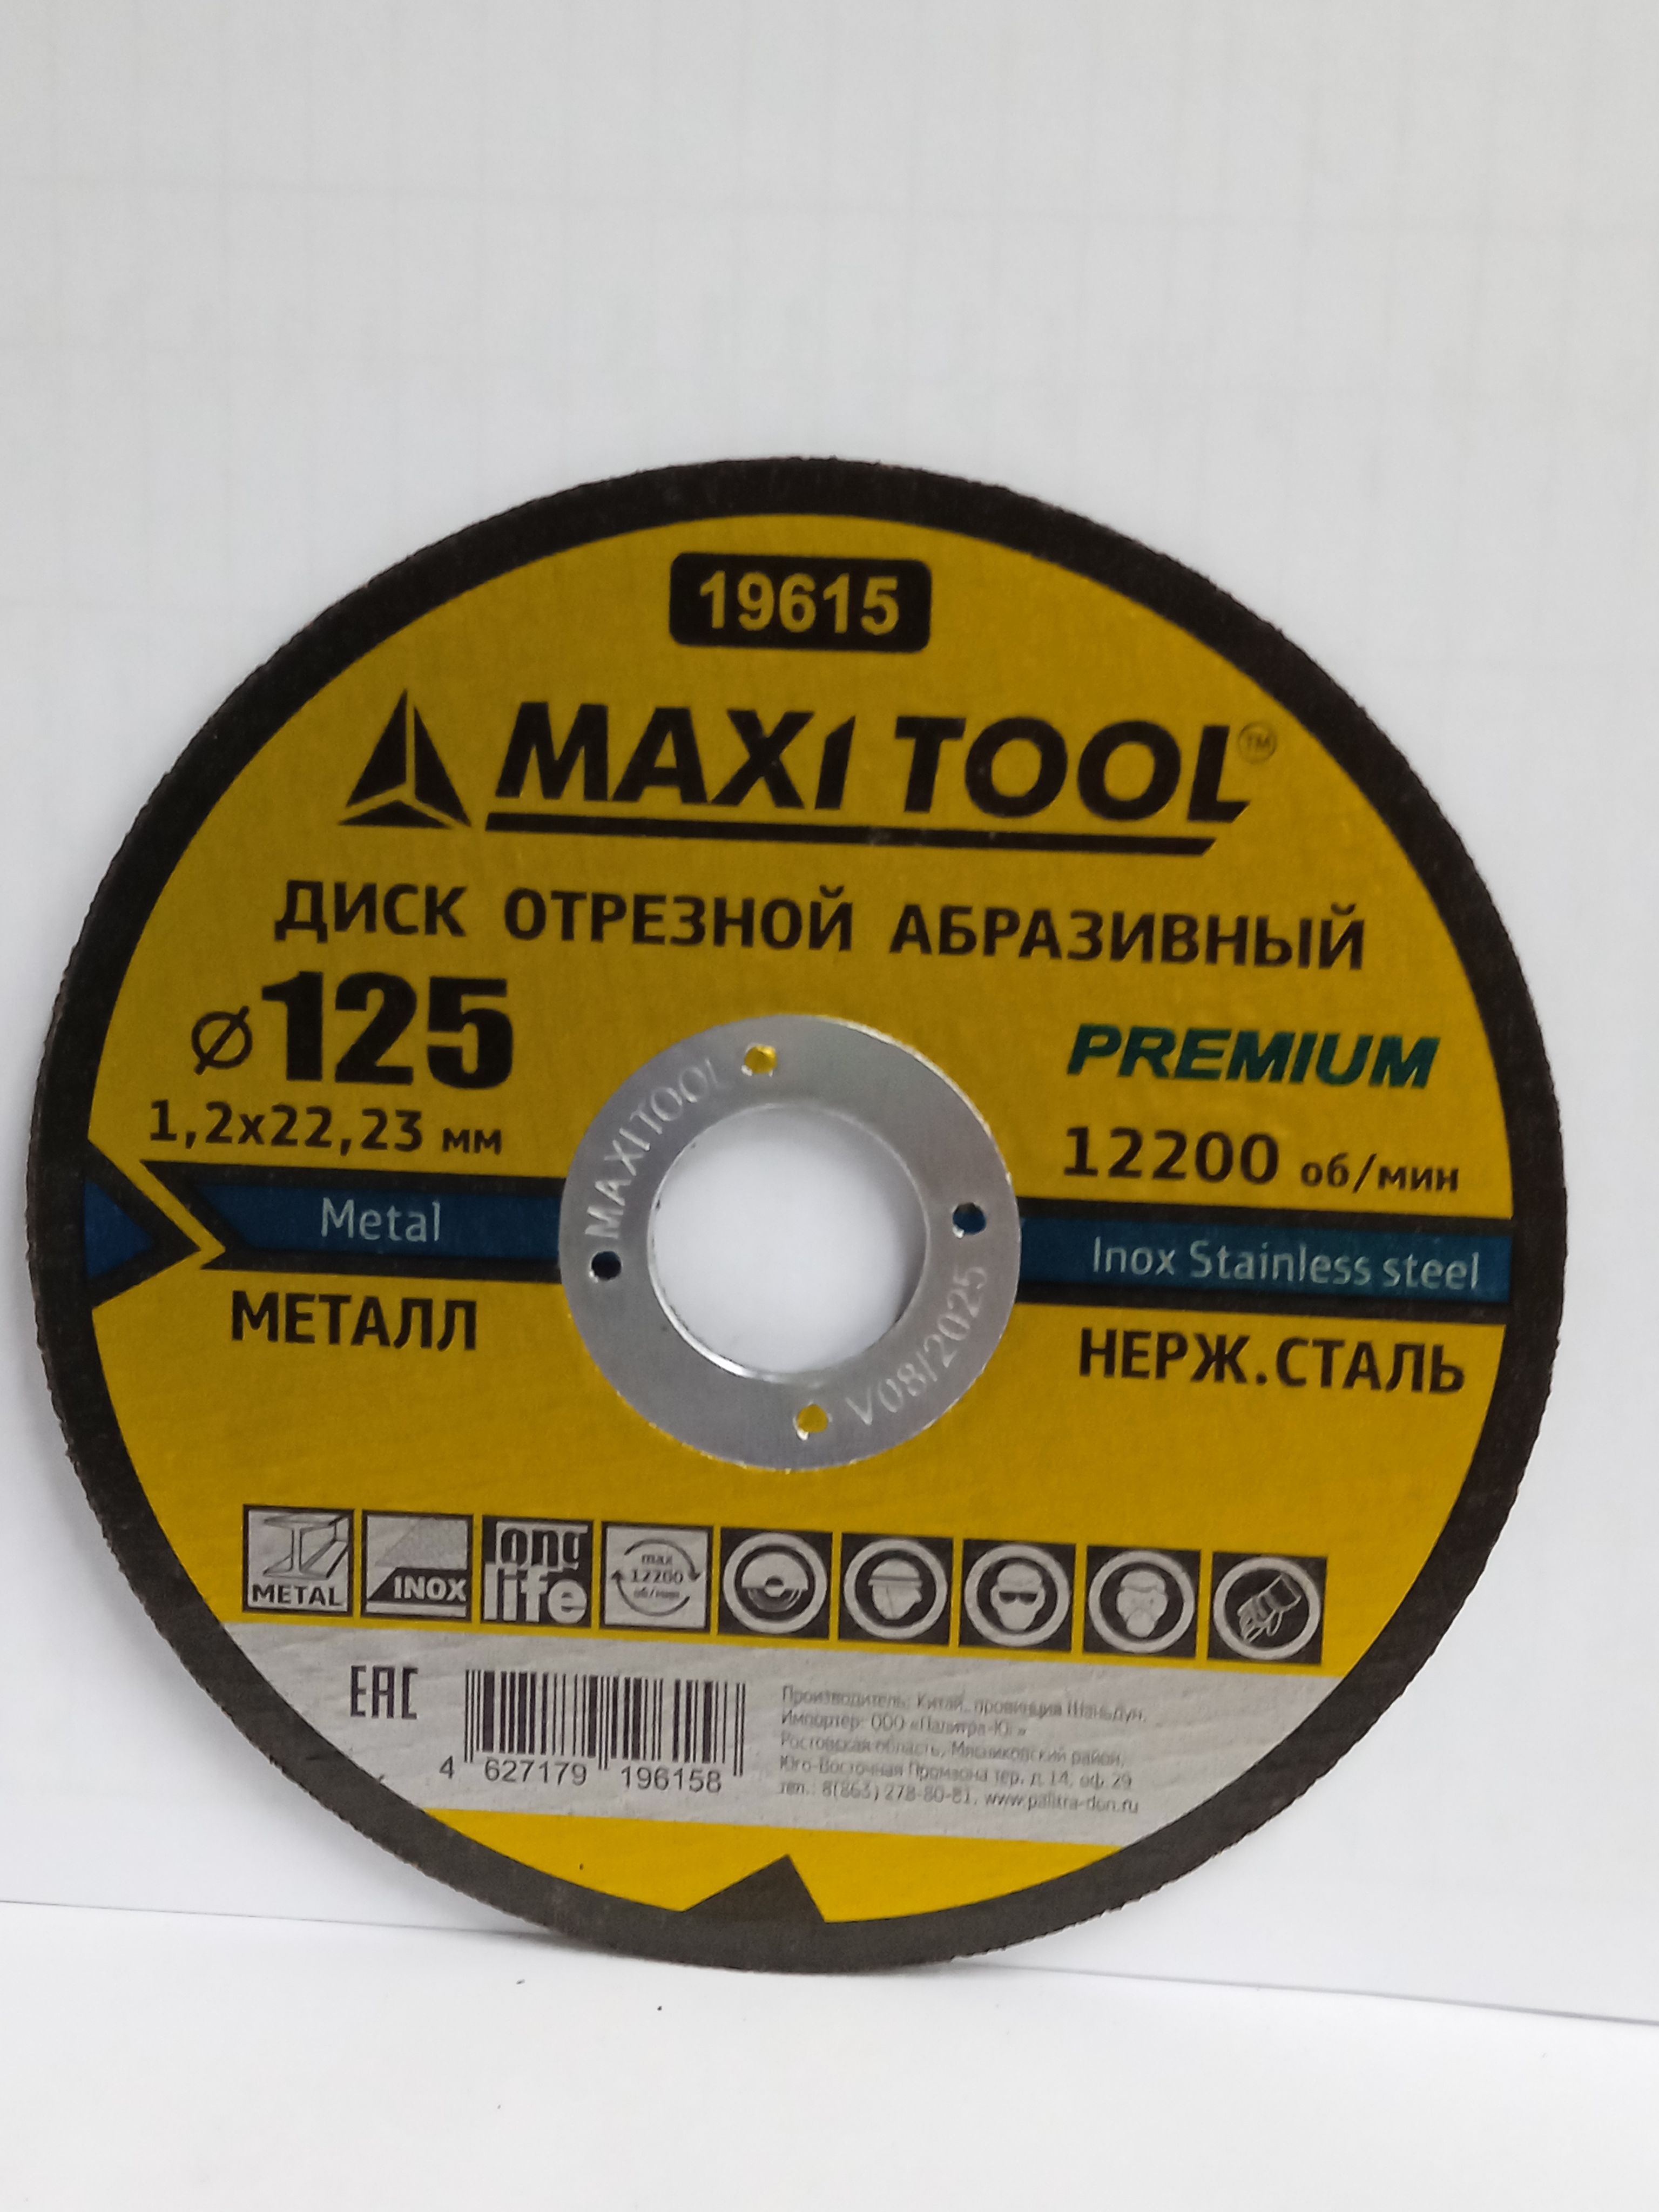 Maxi tool. Maxi Tool краска. Maxi Tool инструмент. Maxi Tool герметик. Камень правильный MAXITOOL 54801.